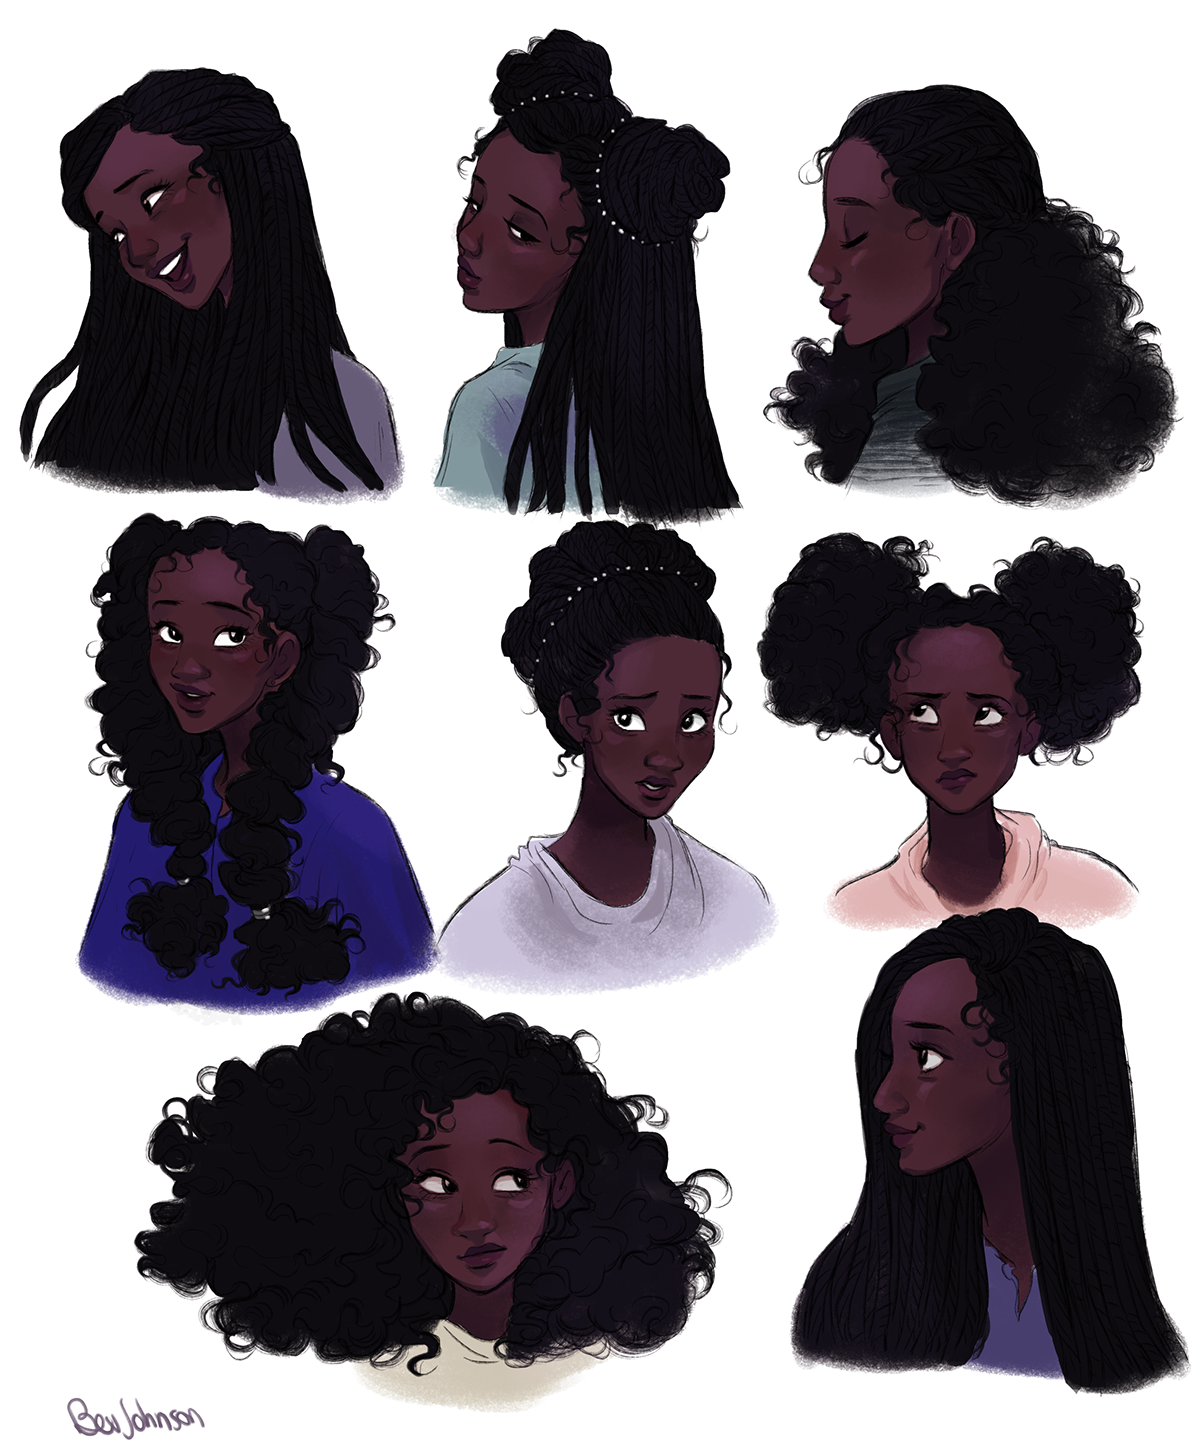 Манга темнокожие. Афро кудри референс. Афро волосы референс. Волосы чернокожих референс. Темнокожие персонажи.